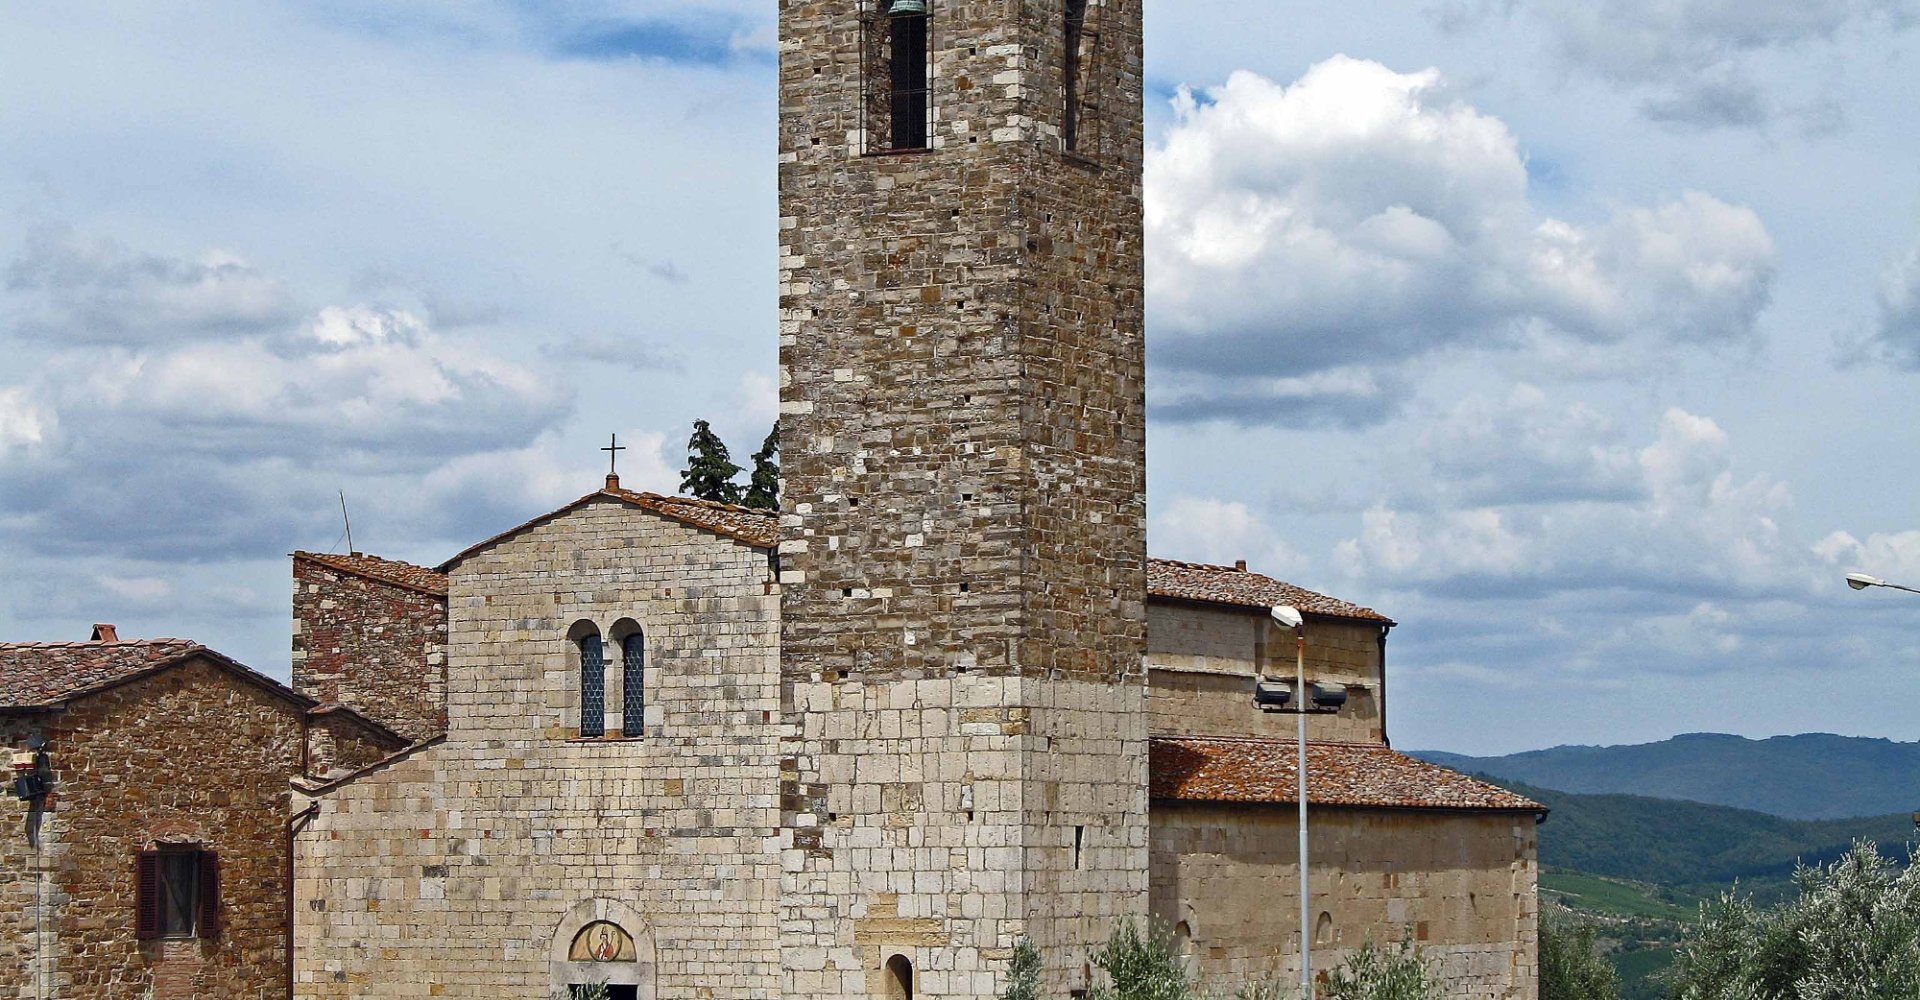 Parroquia de San Donato in Poggio